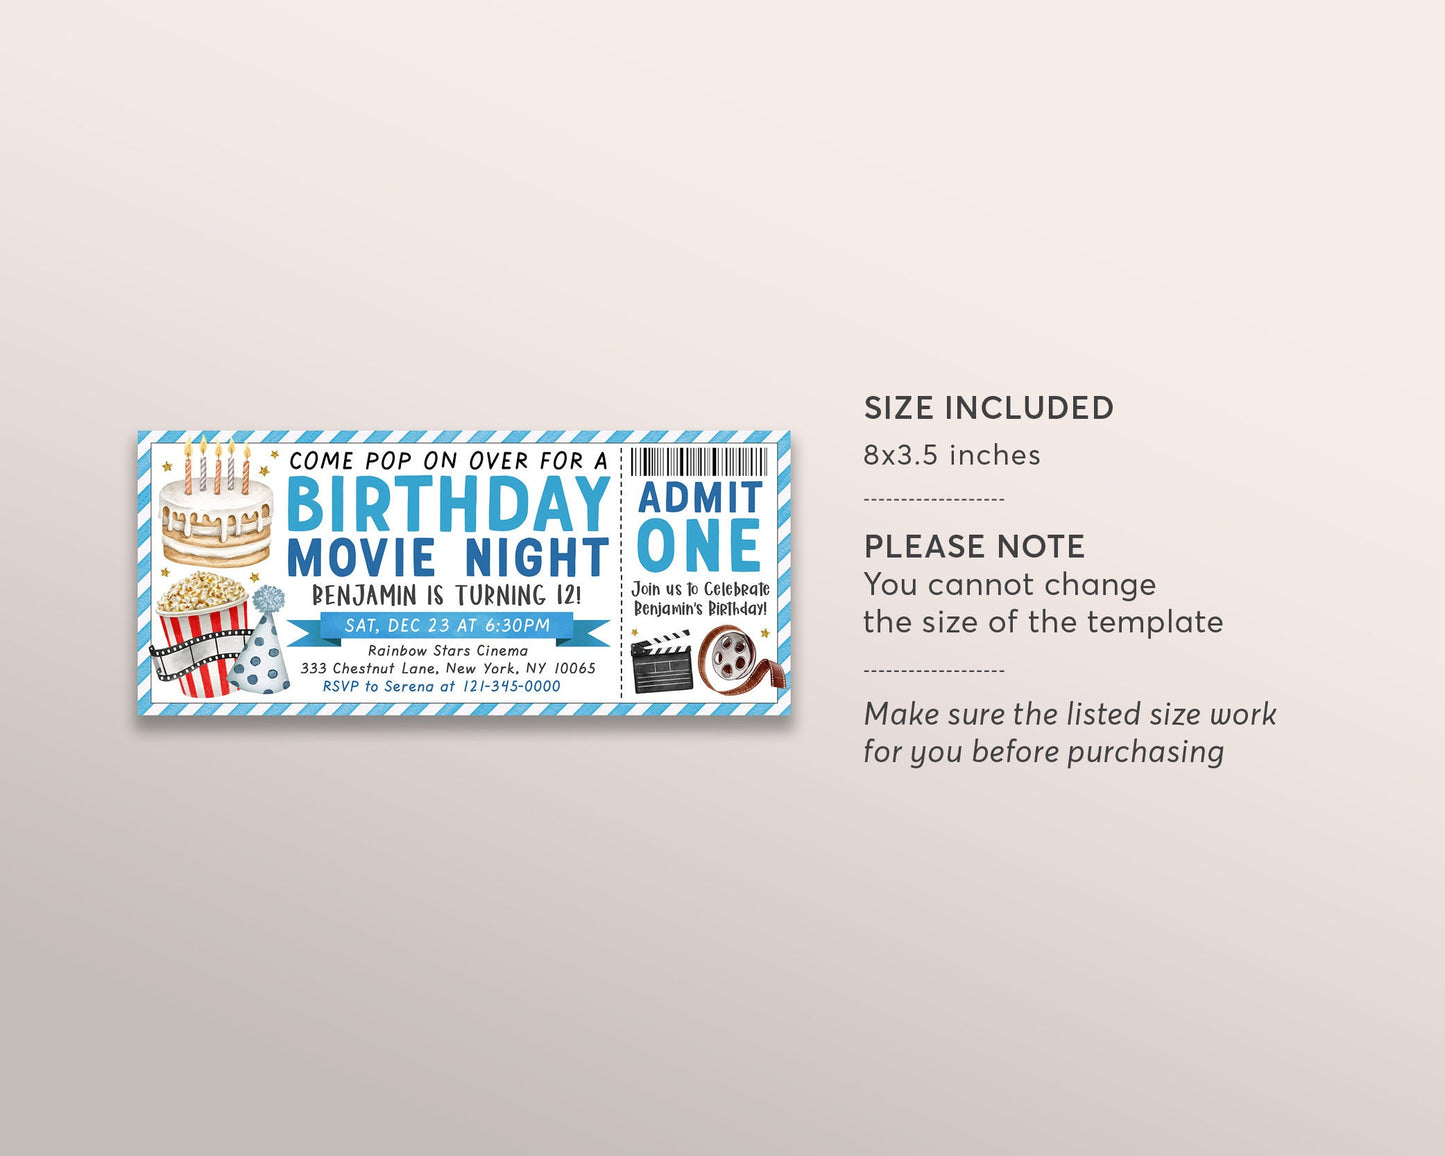 Movie Ticket Birthday Invitation Editable Template, Blue Cinema Movie Night Birthday Party Invite For Kids Printable, Pop On Over Sleepover